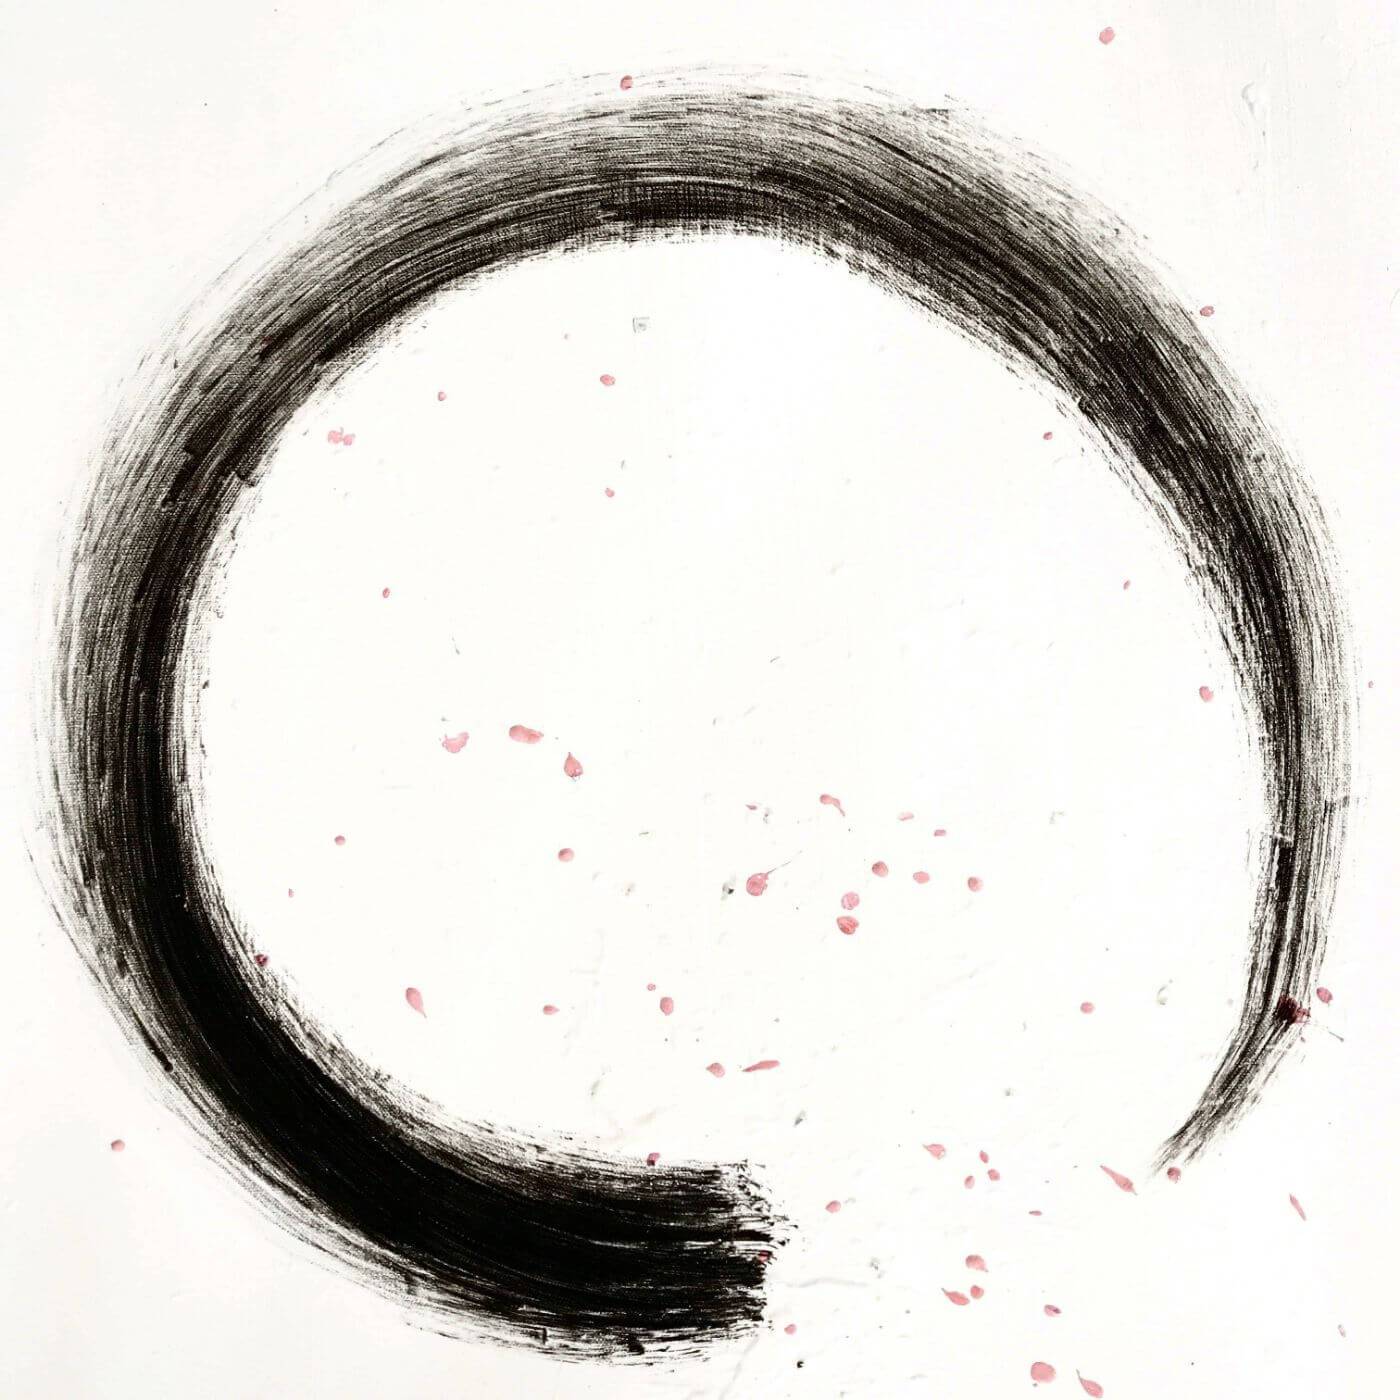 Zen Enso Circle, circle brush, Japanese Circle Canvas Print for Sale by  Tanysl